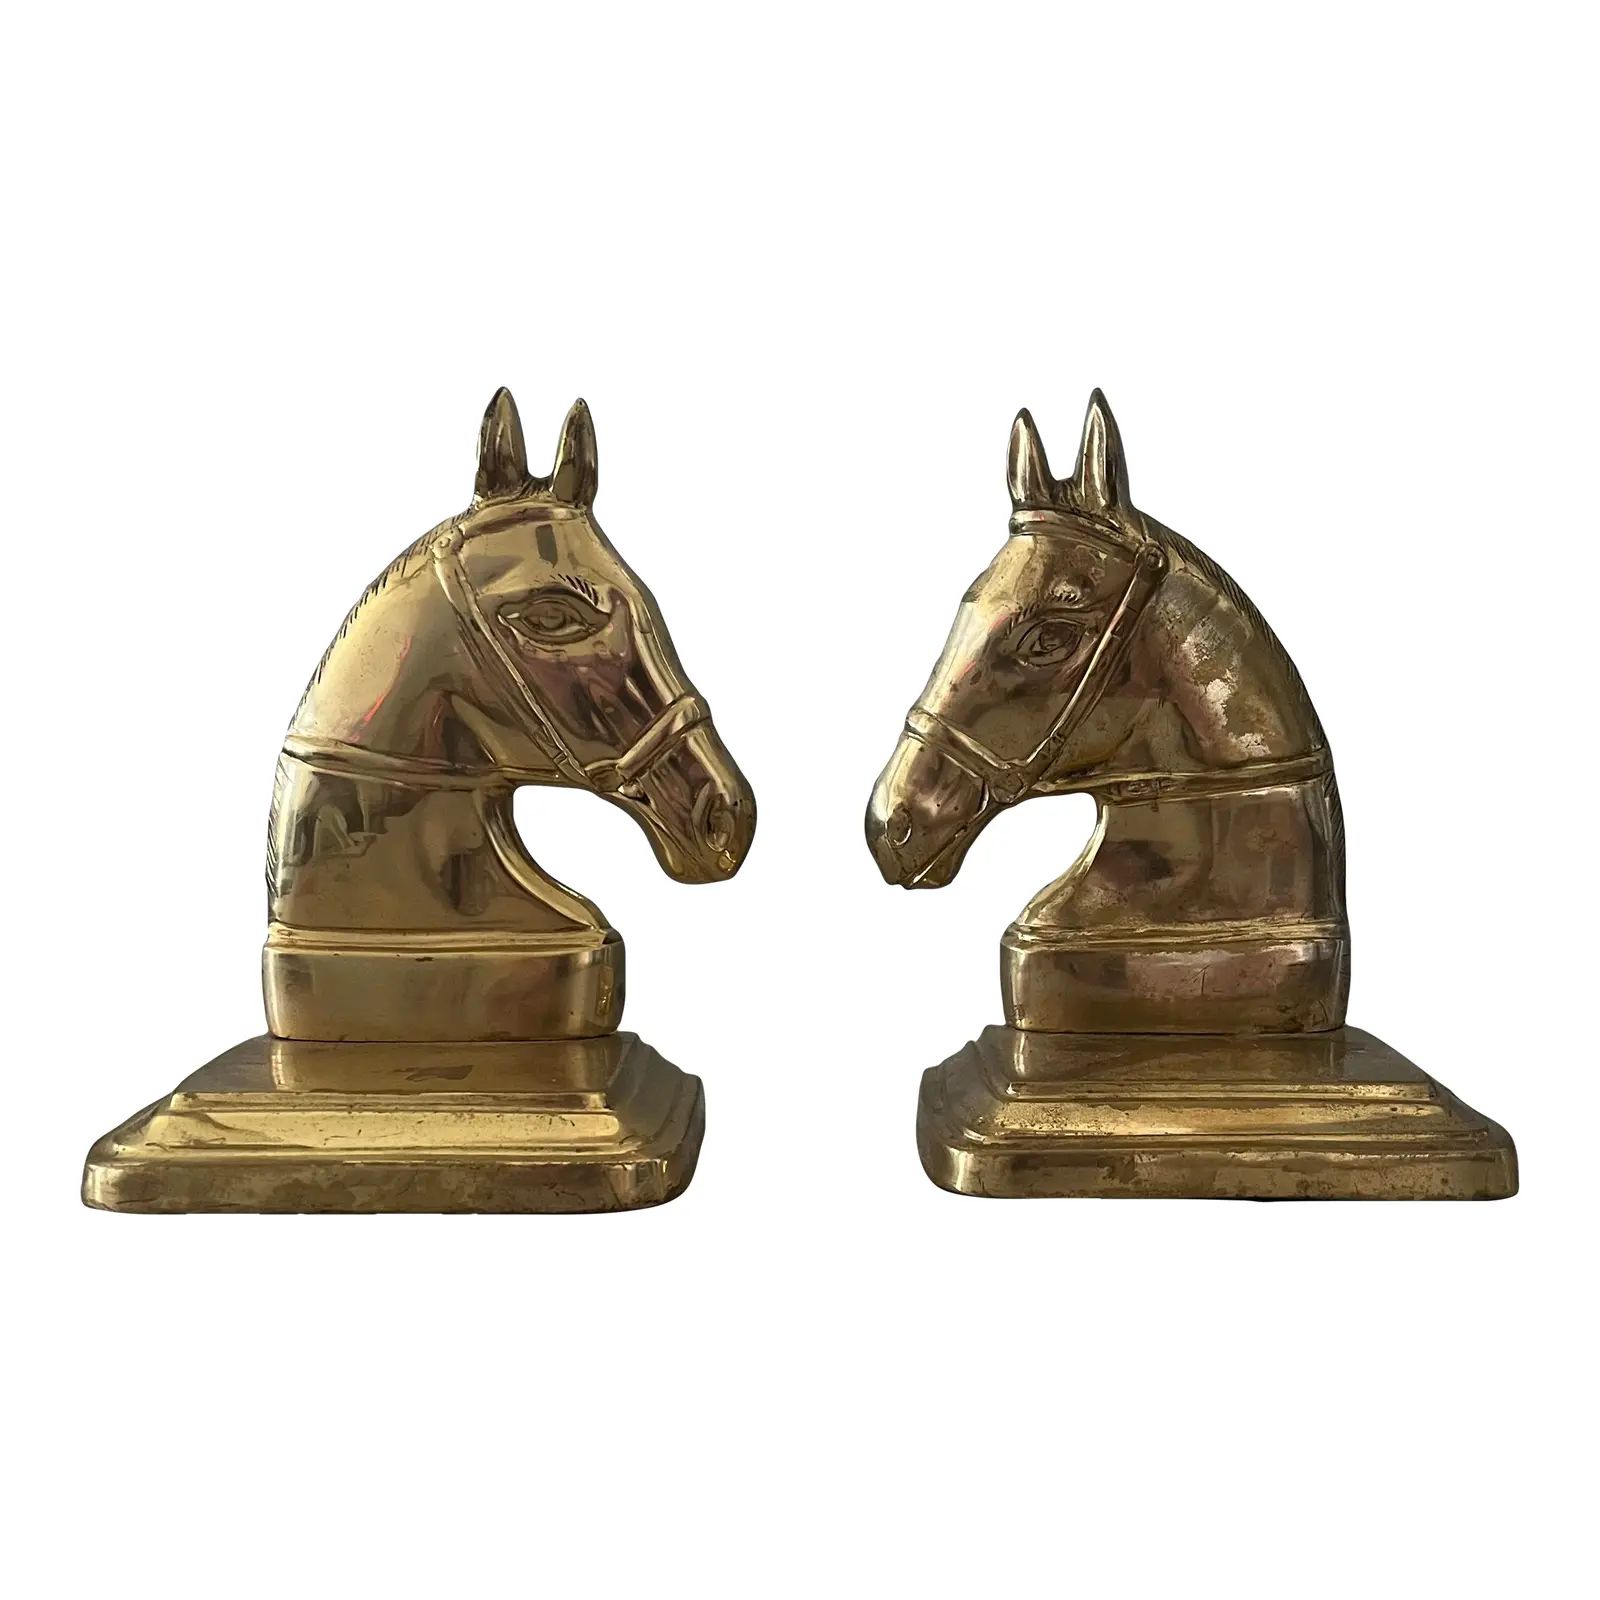 1970s Brass Horse Head Bookends - a Pair | Chairish